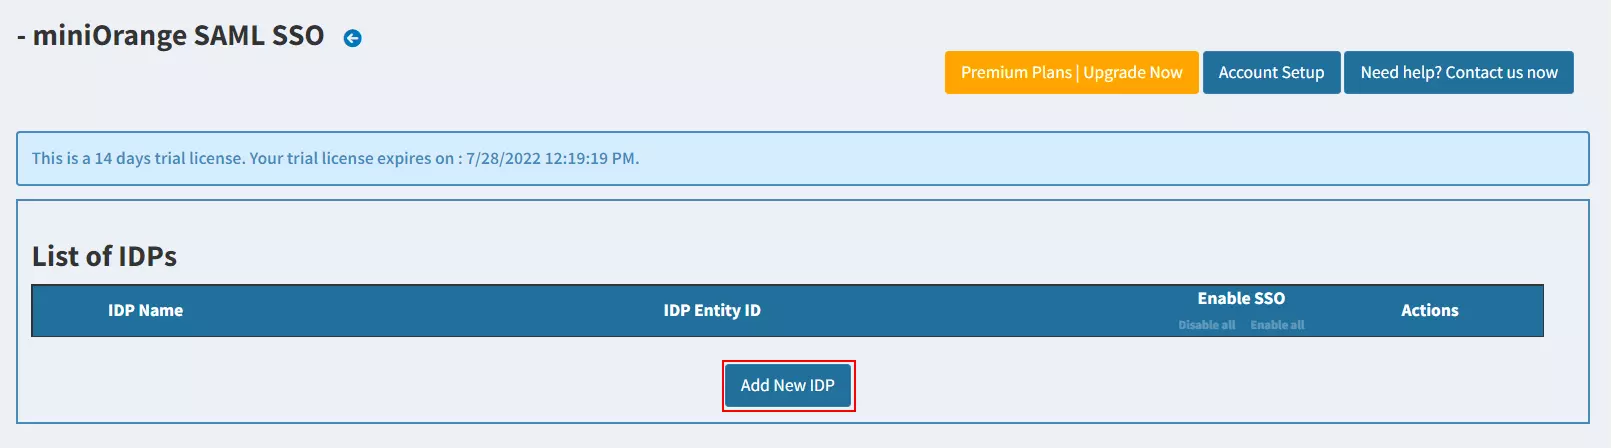 nopCommerce Single Sign-On (SSO) using ADFS as IDP - Add new IDP